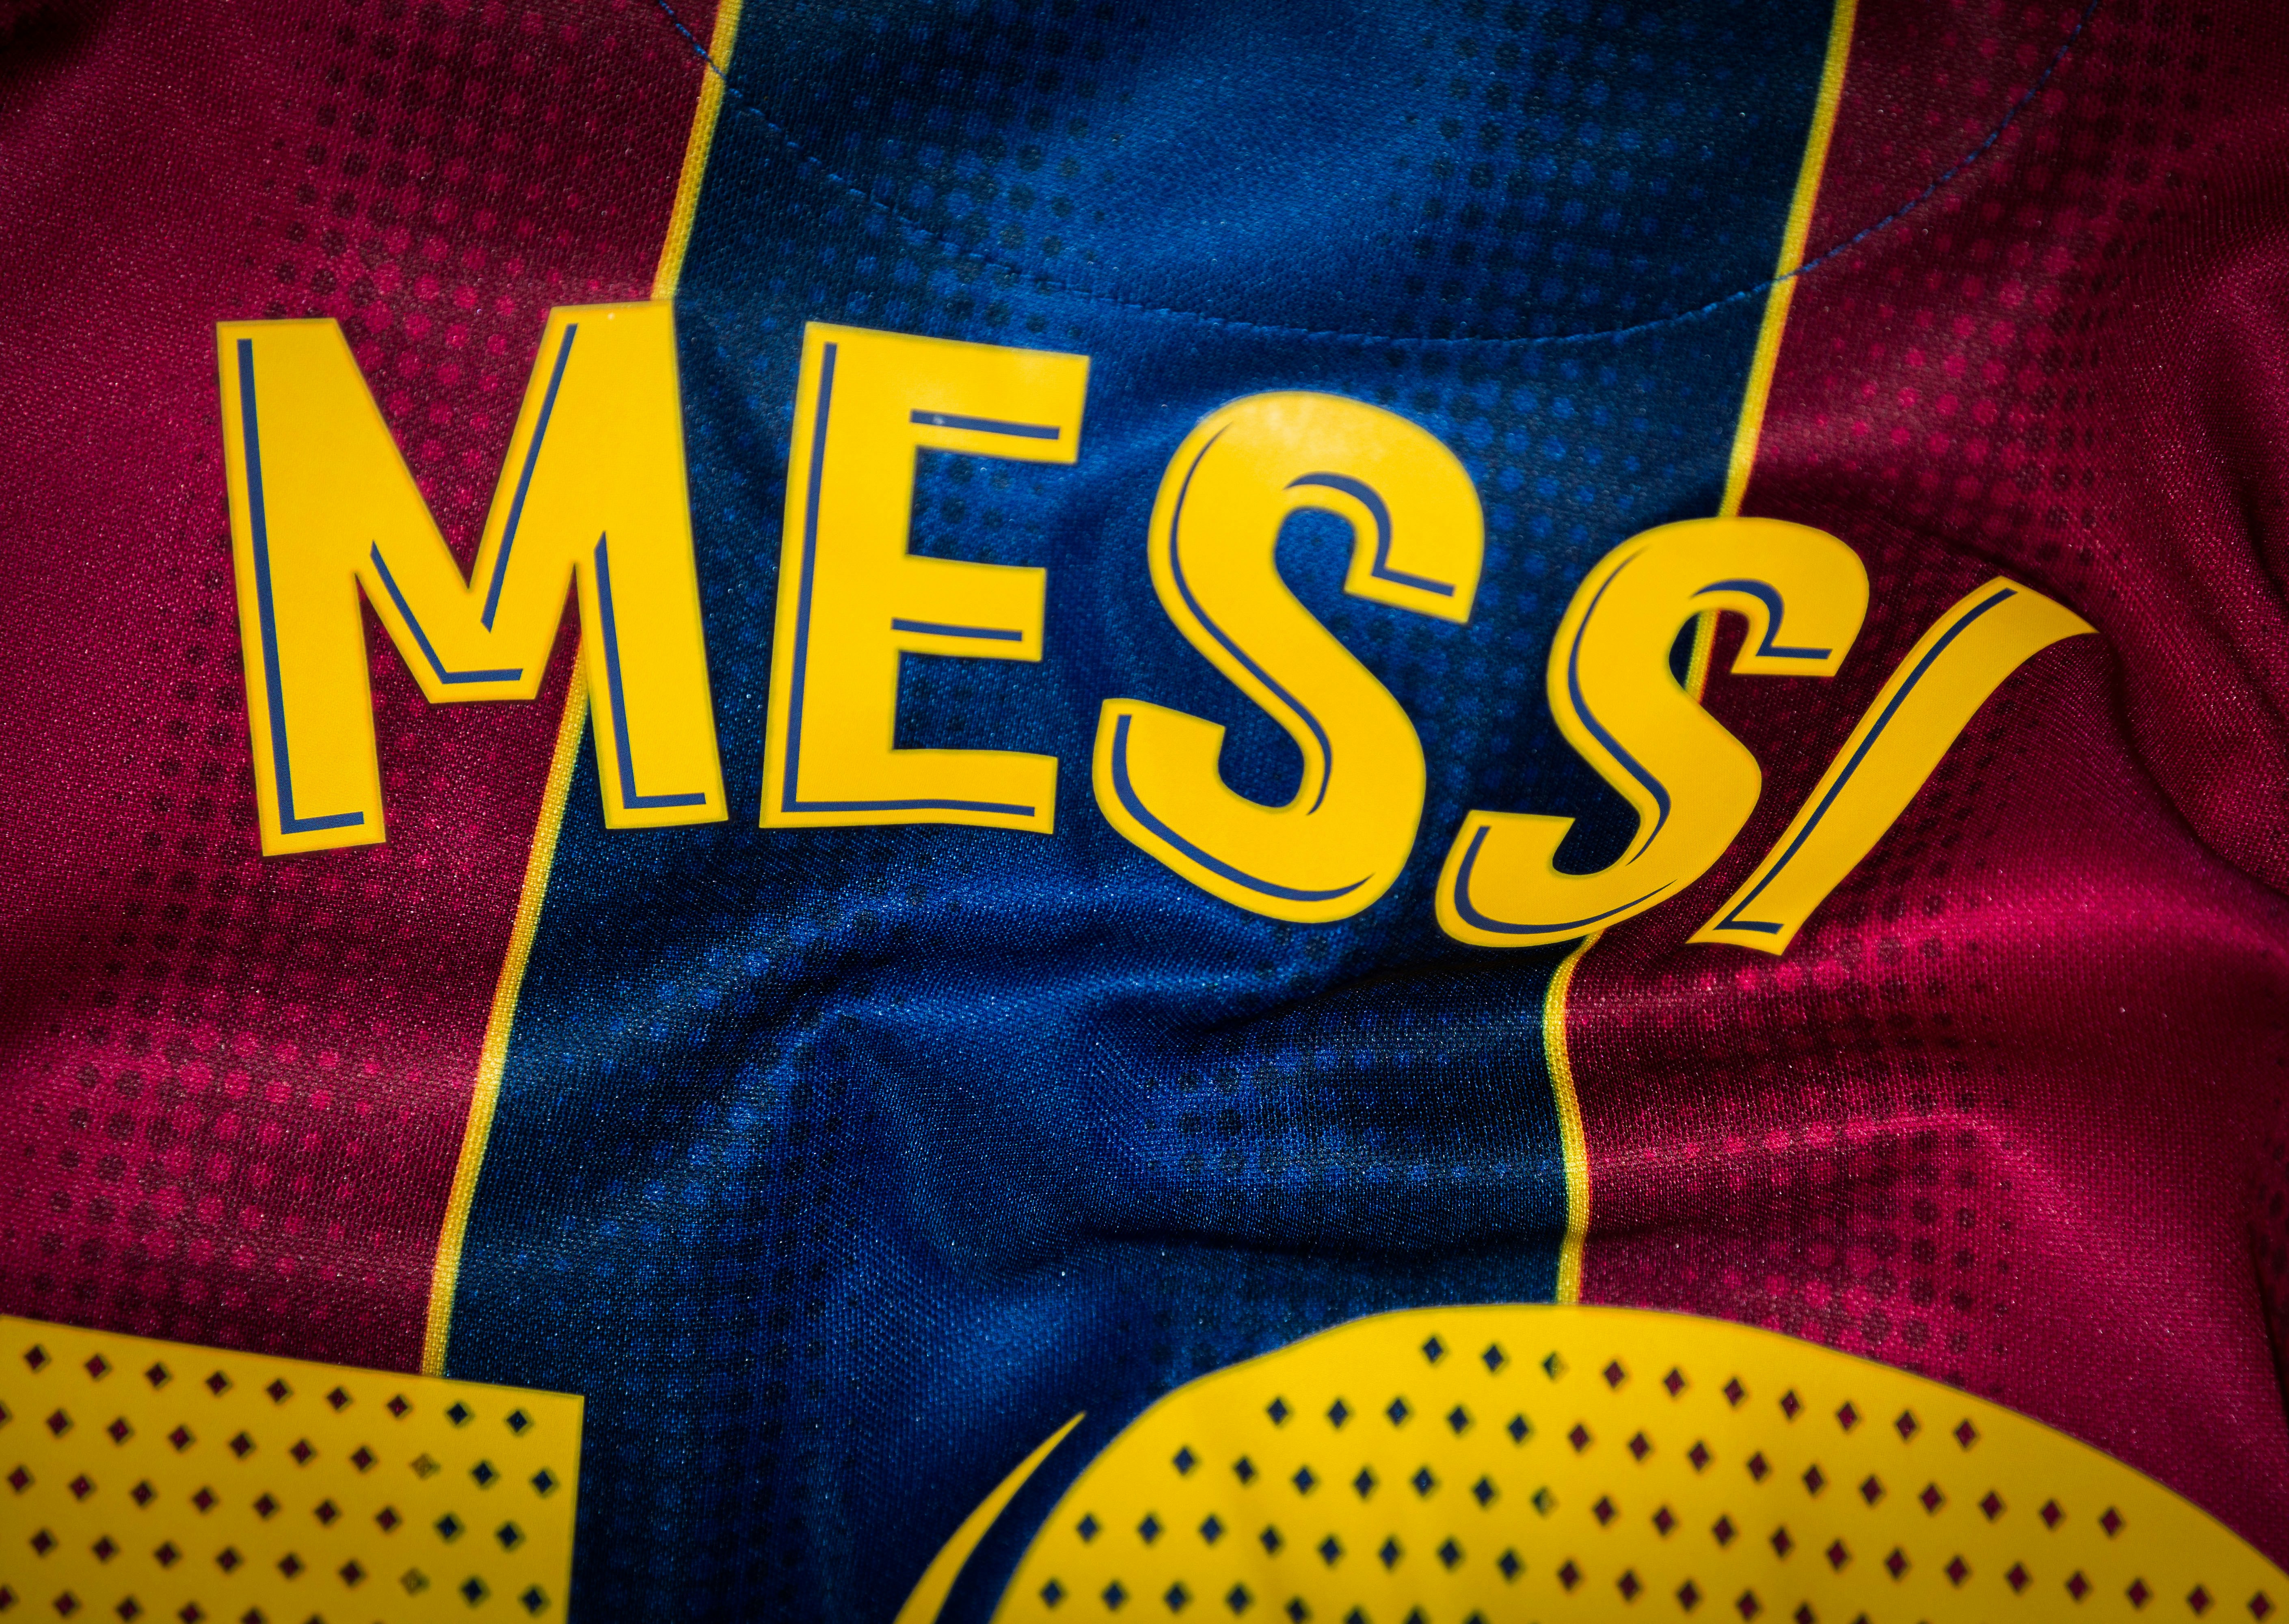 Barcelona drake jersey for sale